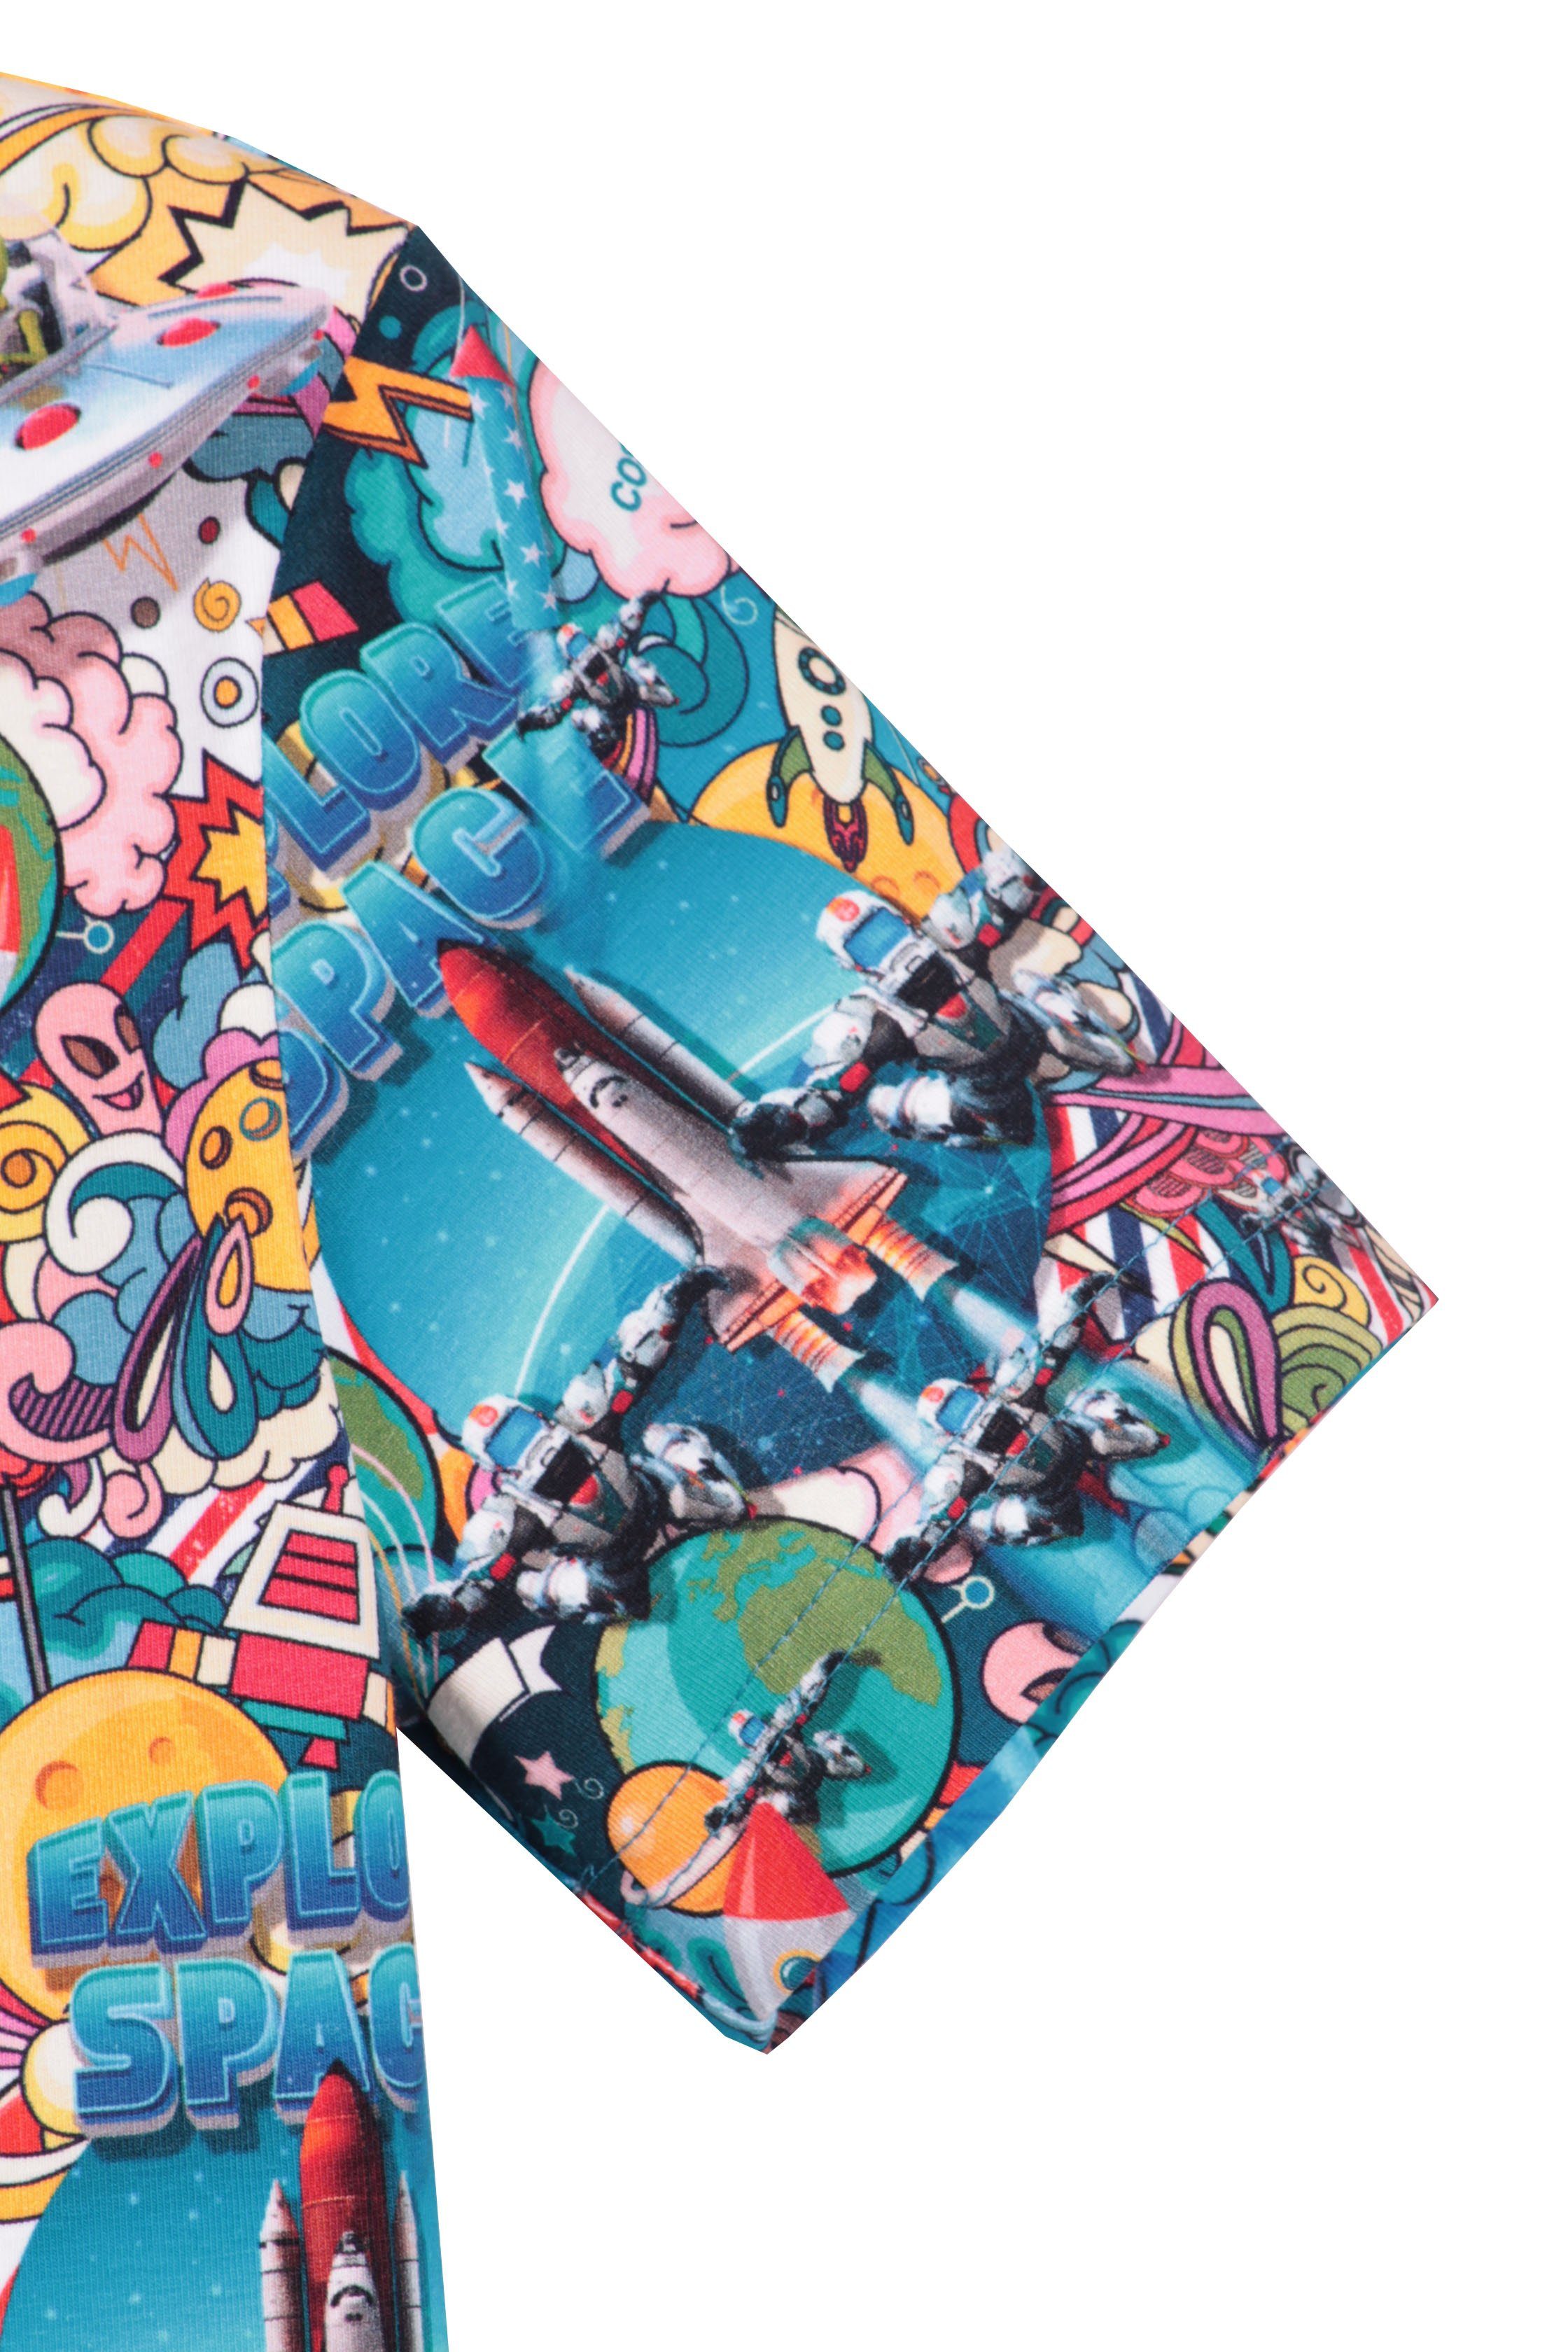 Jungen T-Shirt Comic-Raketen-Motiv coolismo für Baumwolle mit Print-Shirt Alloverprint, Rundhalsauschnitt,